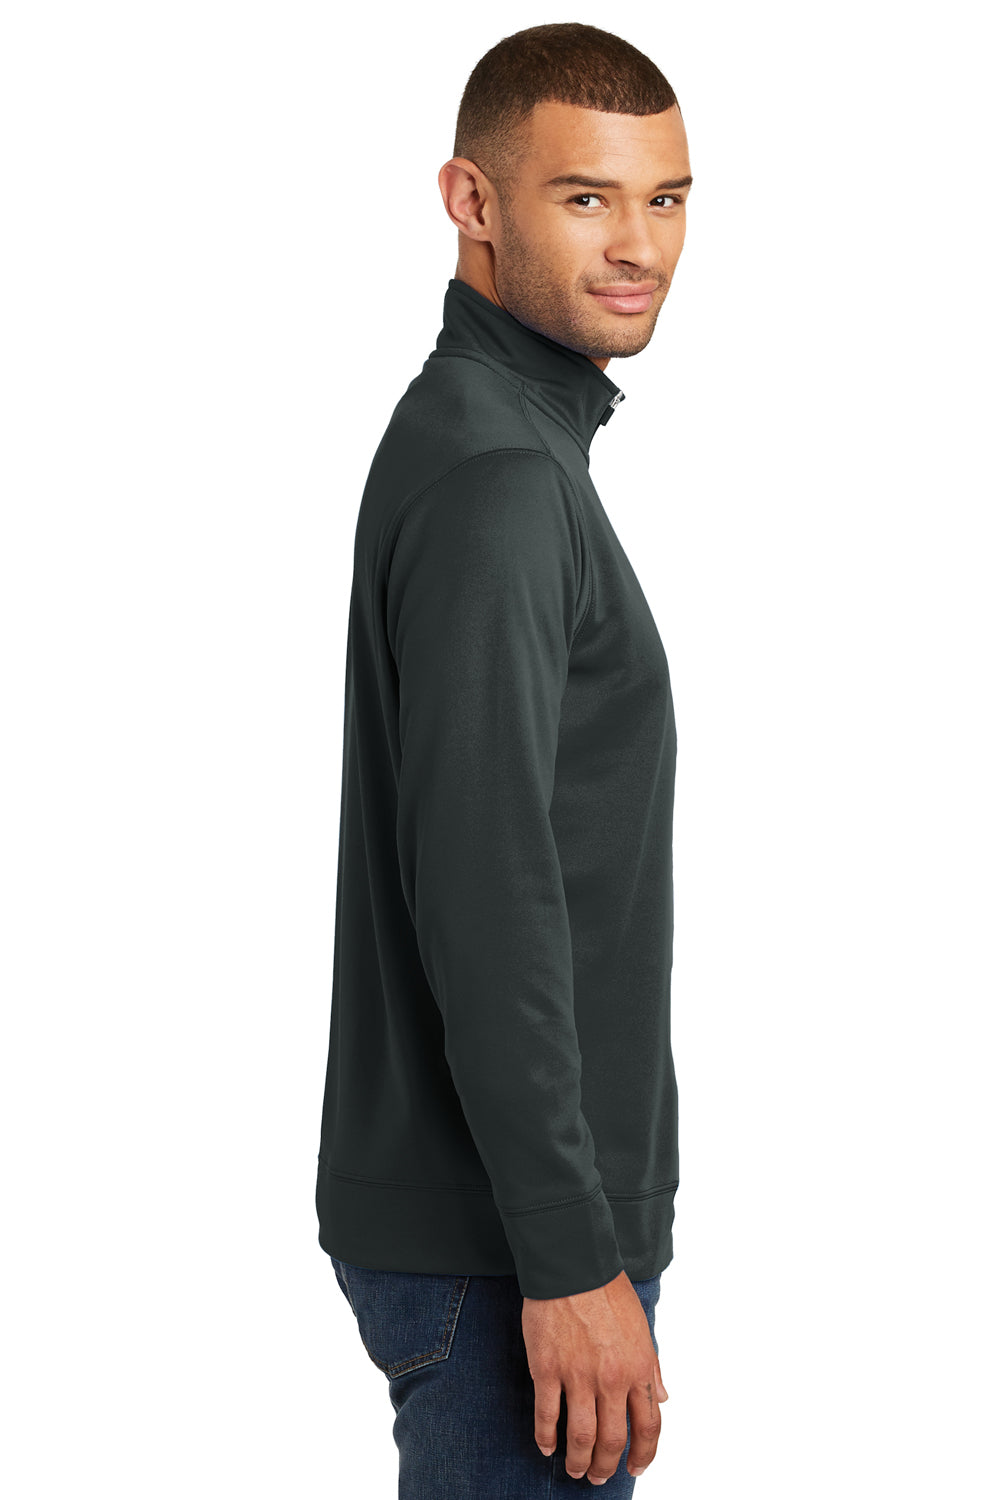 Port & Company PC590Q Mens Dry Zone Performance Moisture Wicking Fleece 1/4 Zip Sweatshirt Black Side